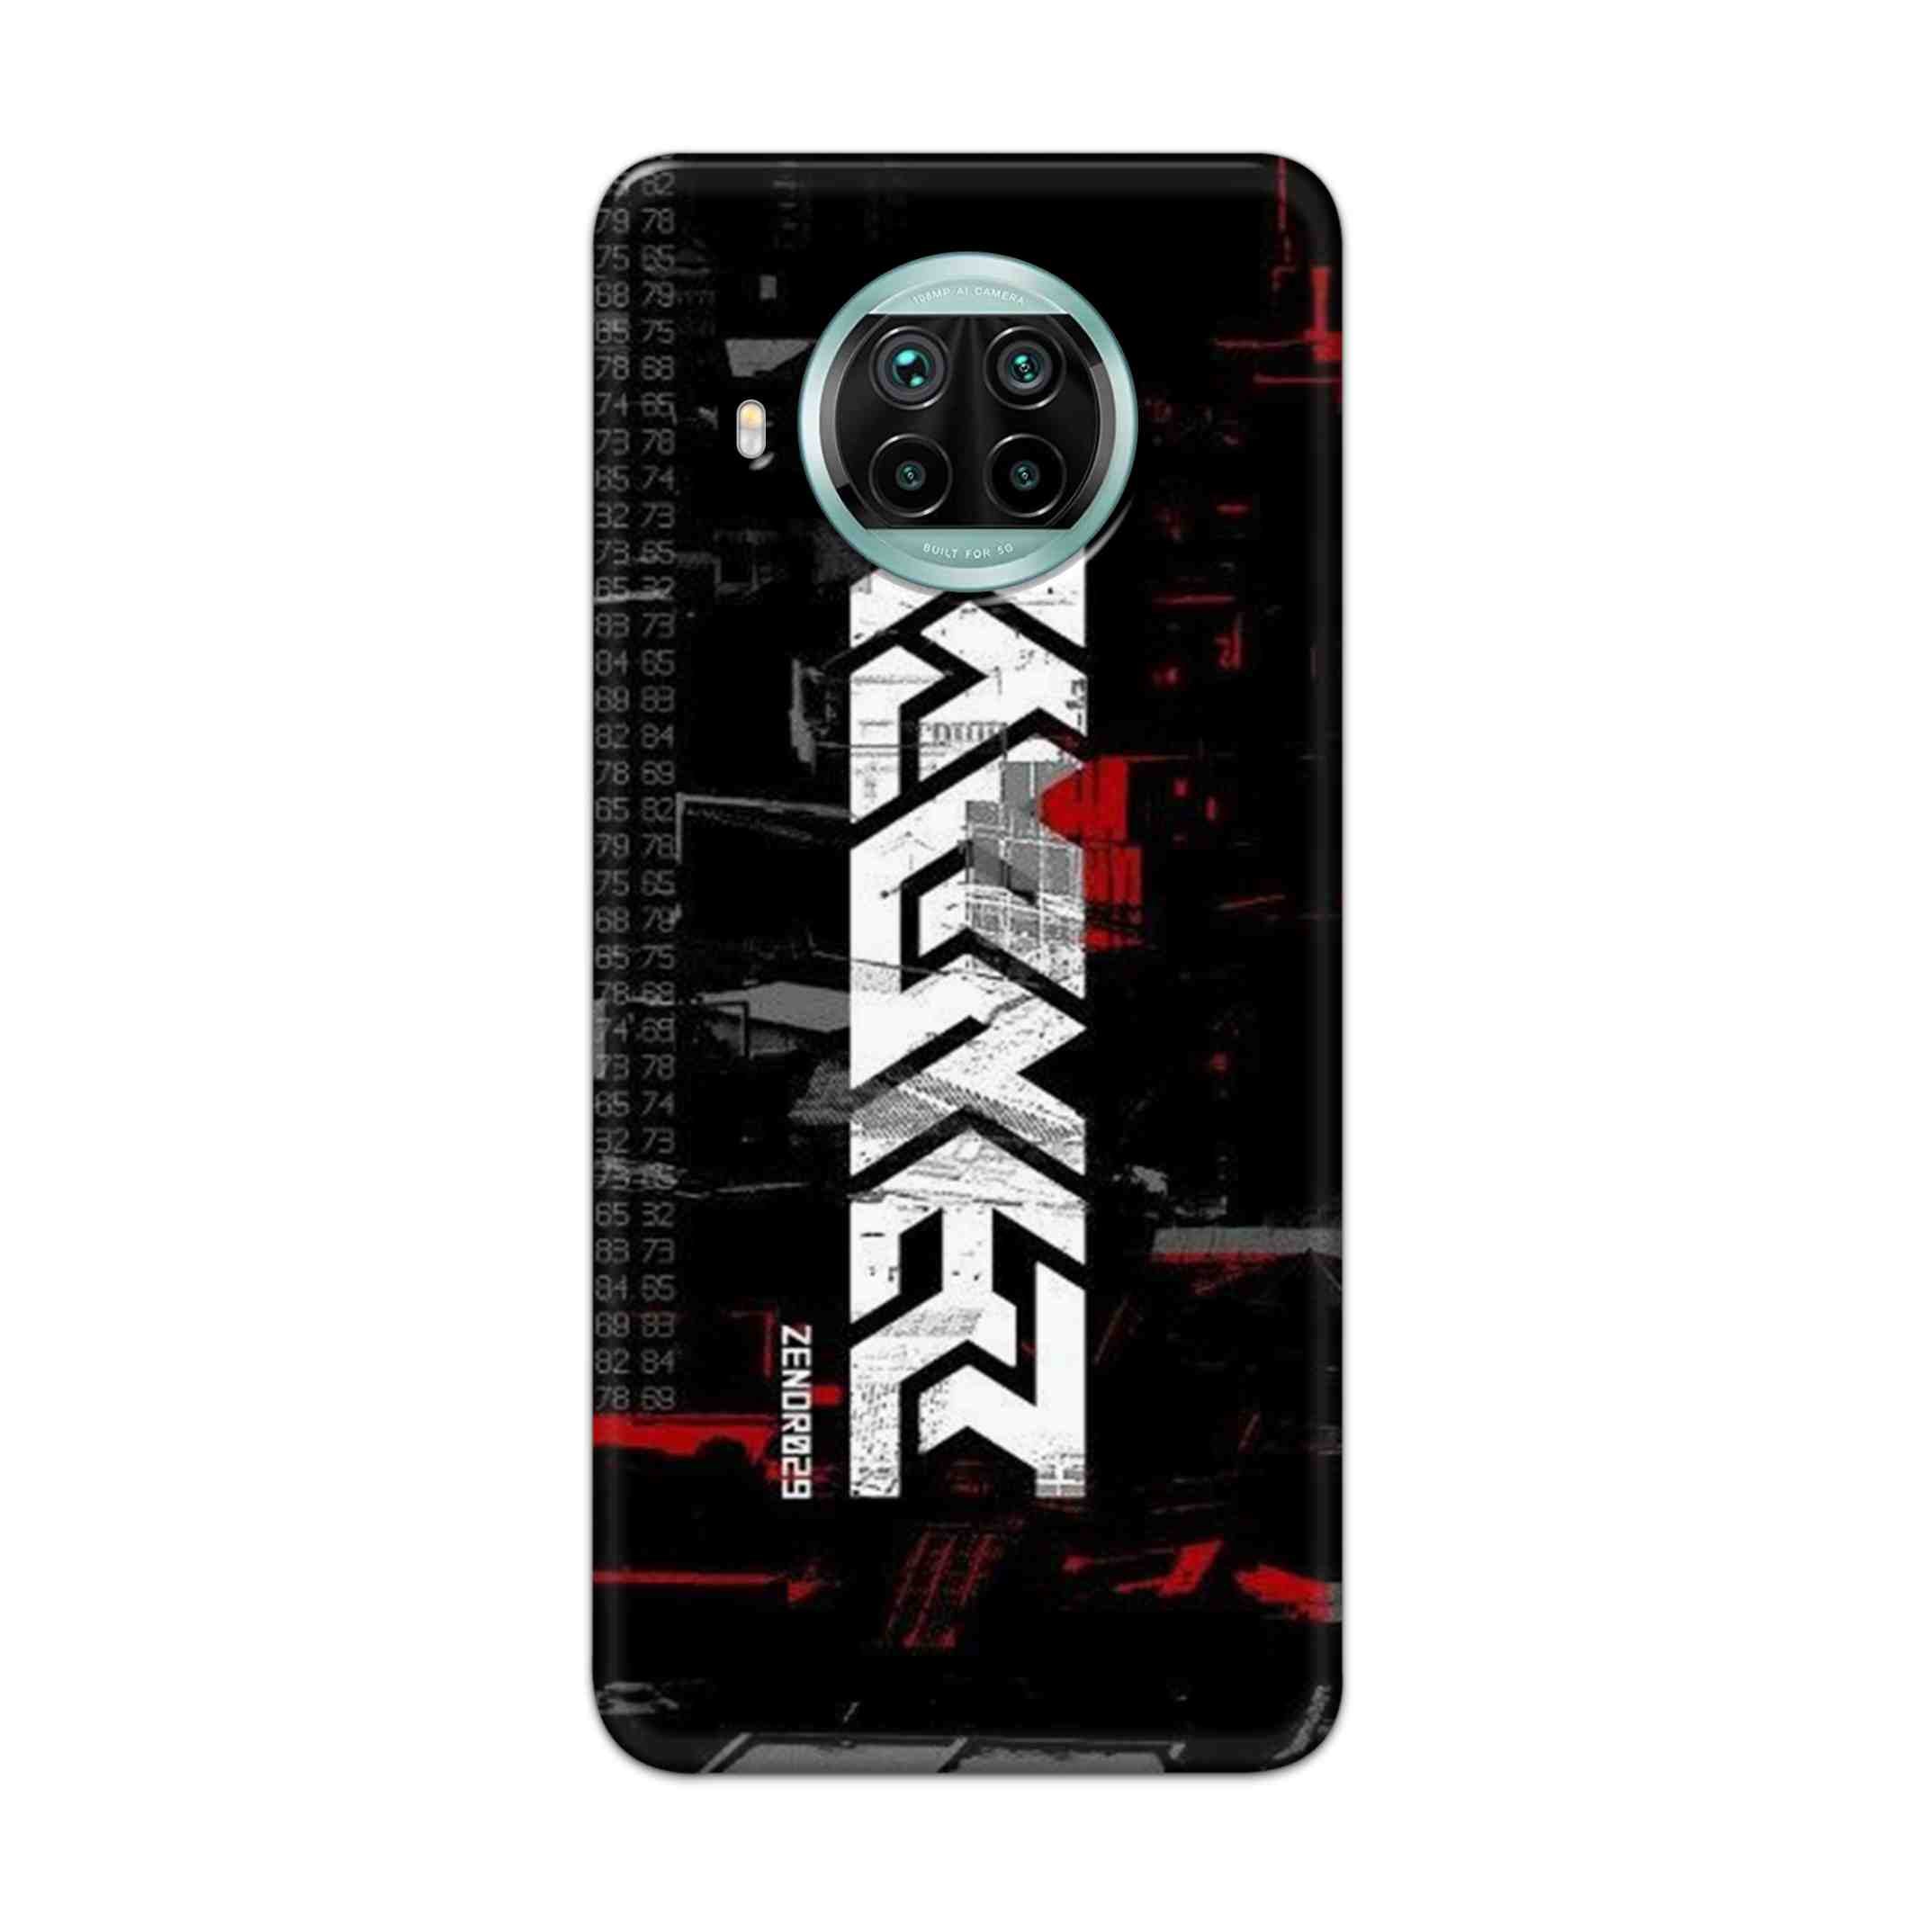 Buy Raxer Hard Back Mobile Phone Case Cover For Xiaomi Mi 10i Online